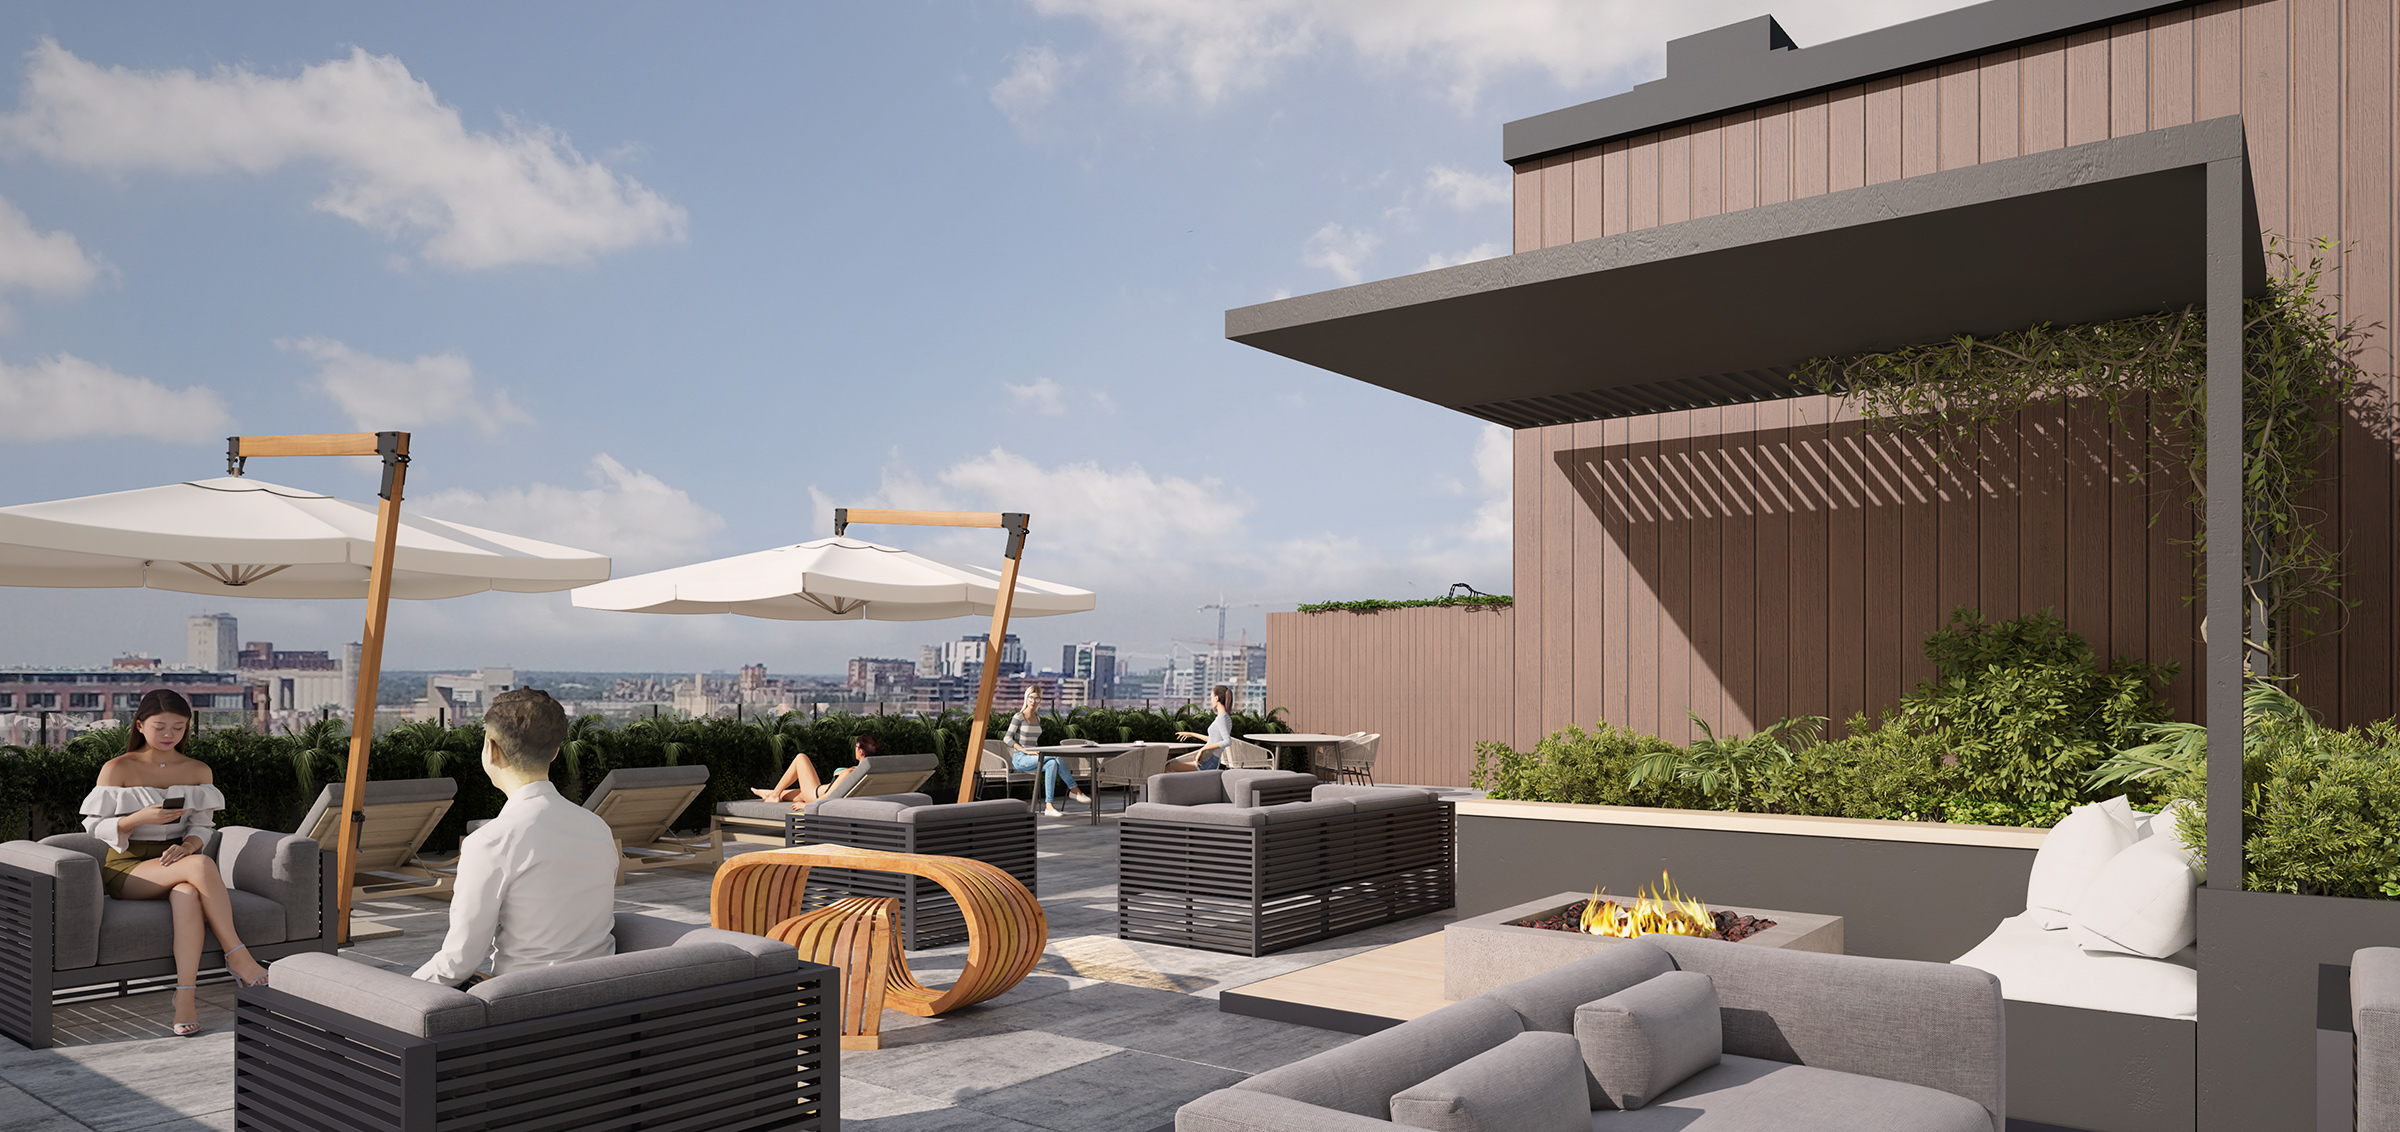 Terrace for all tenants of the Estrada condo project